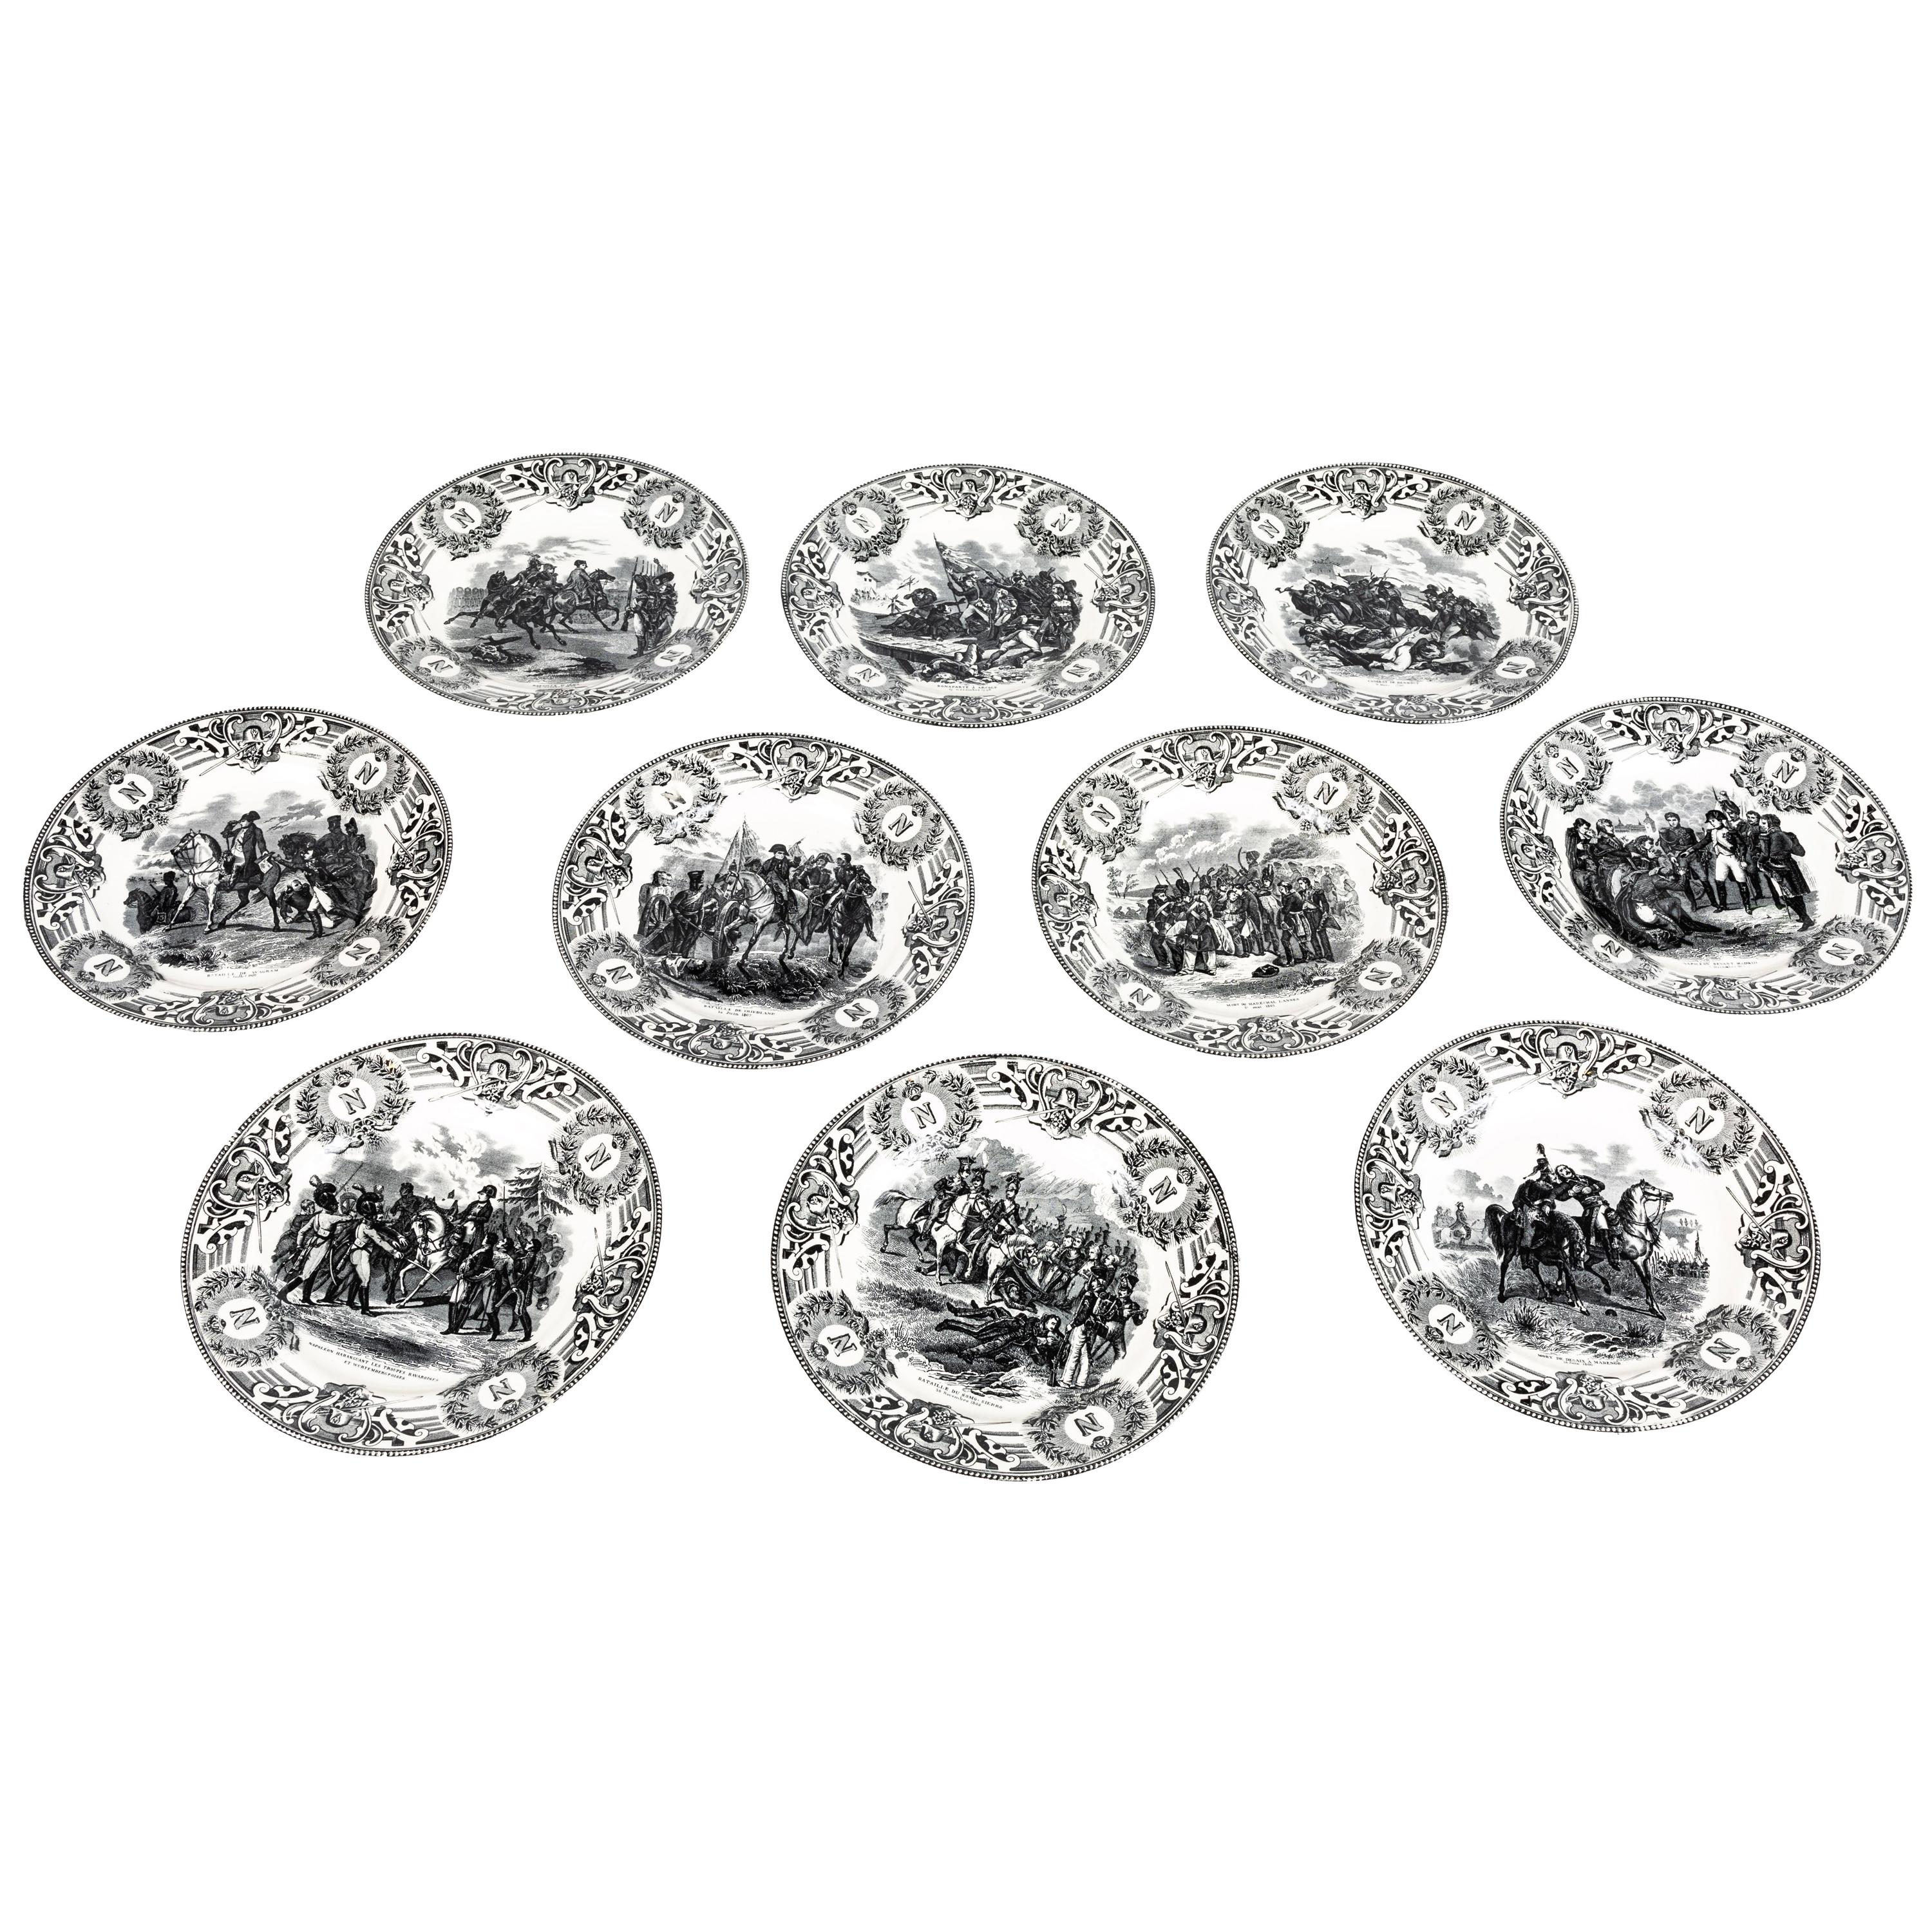 19th Century Boch Freres Napoleonic Plates, Set of 10